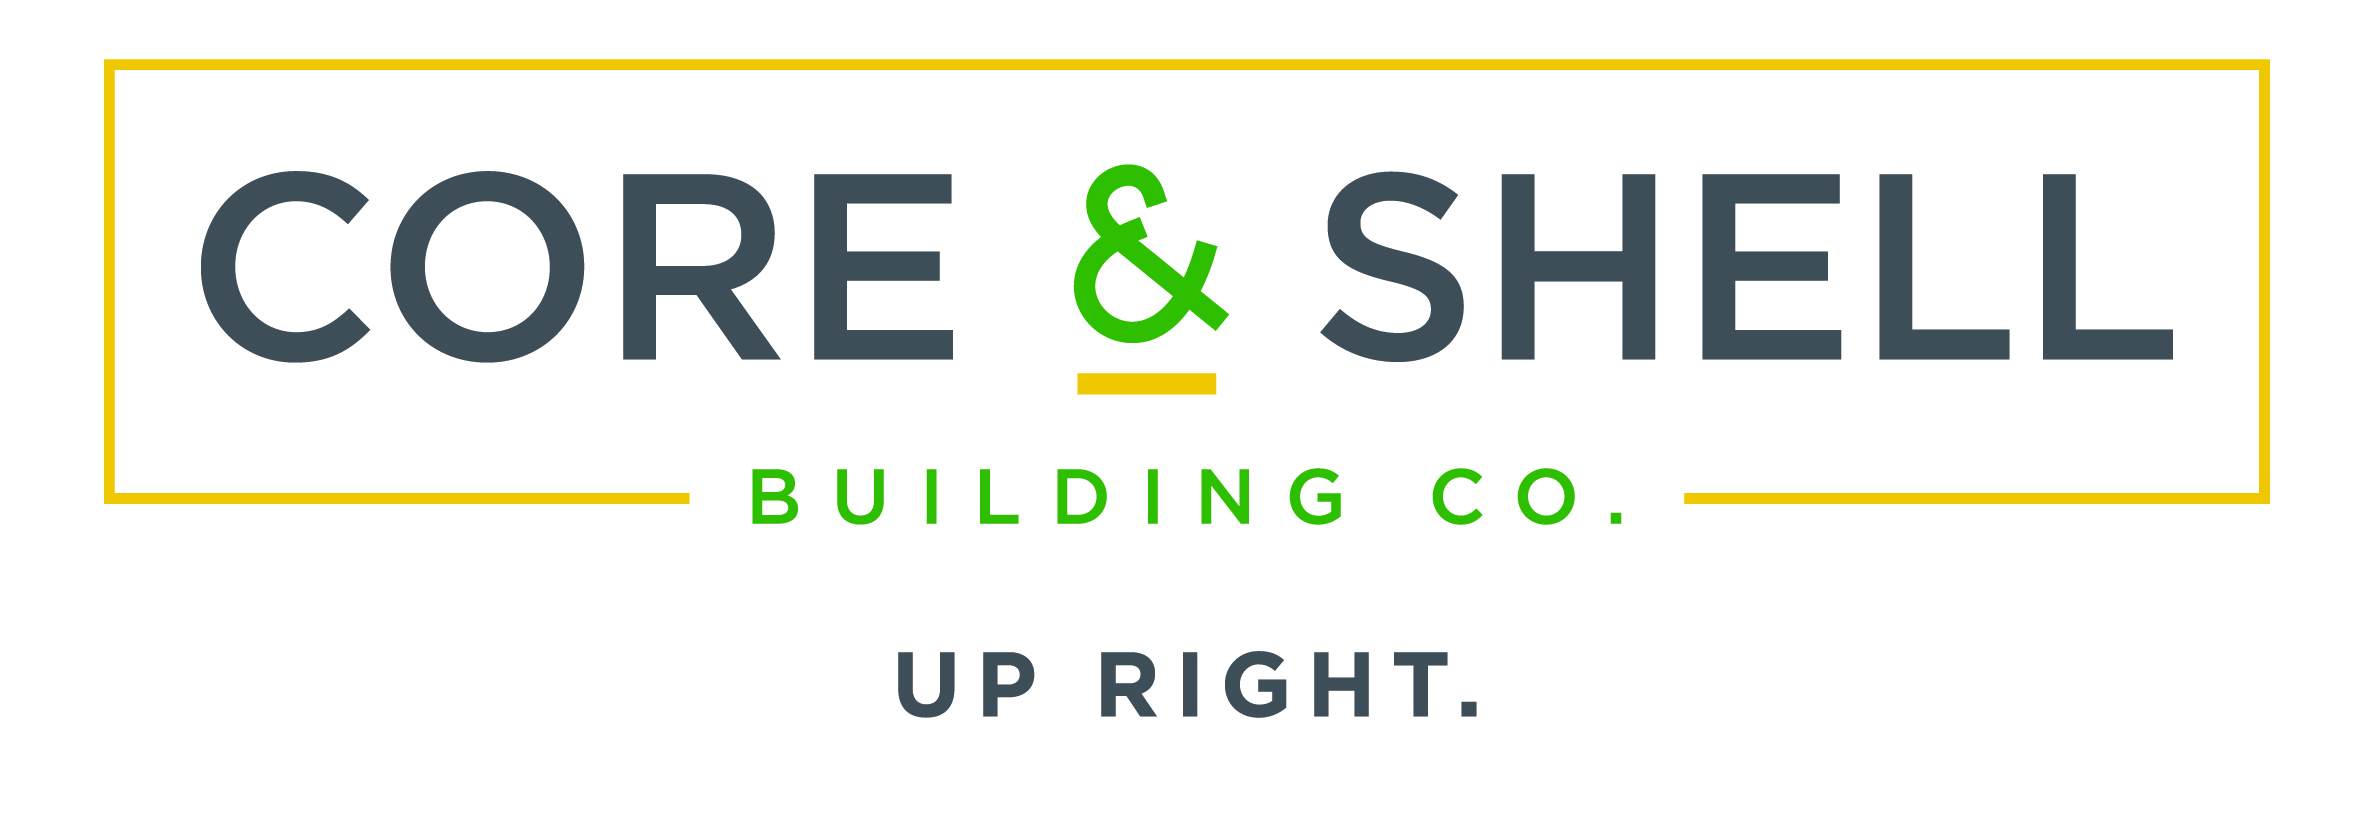 Core & Shell Building Co., Inc logo 